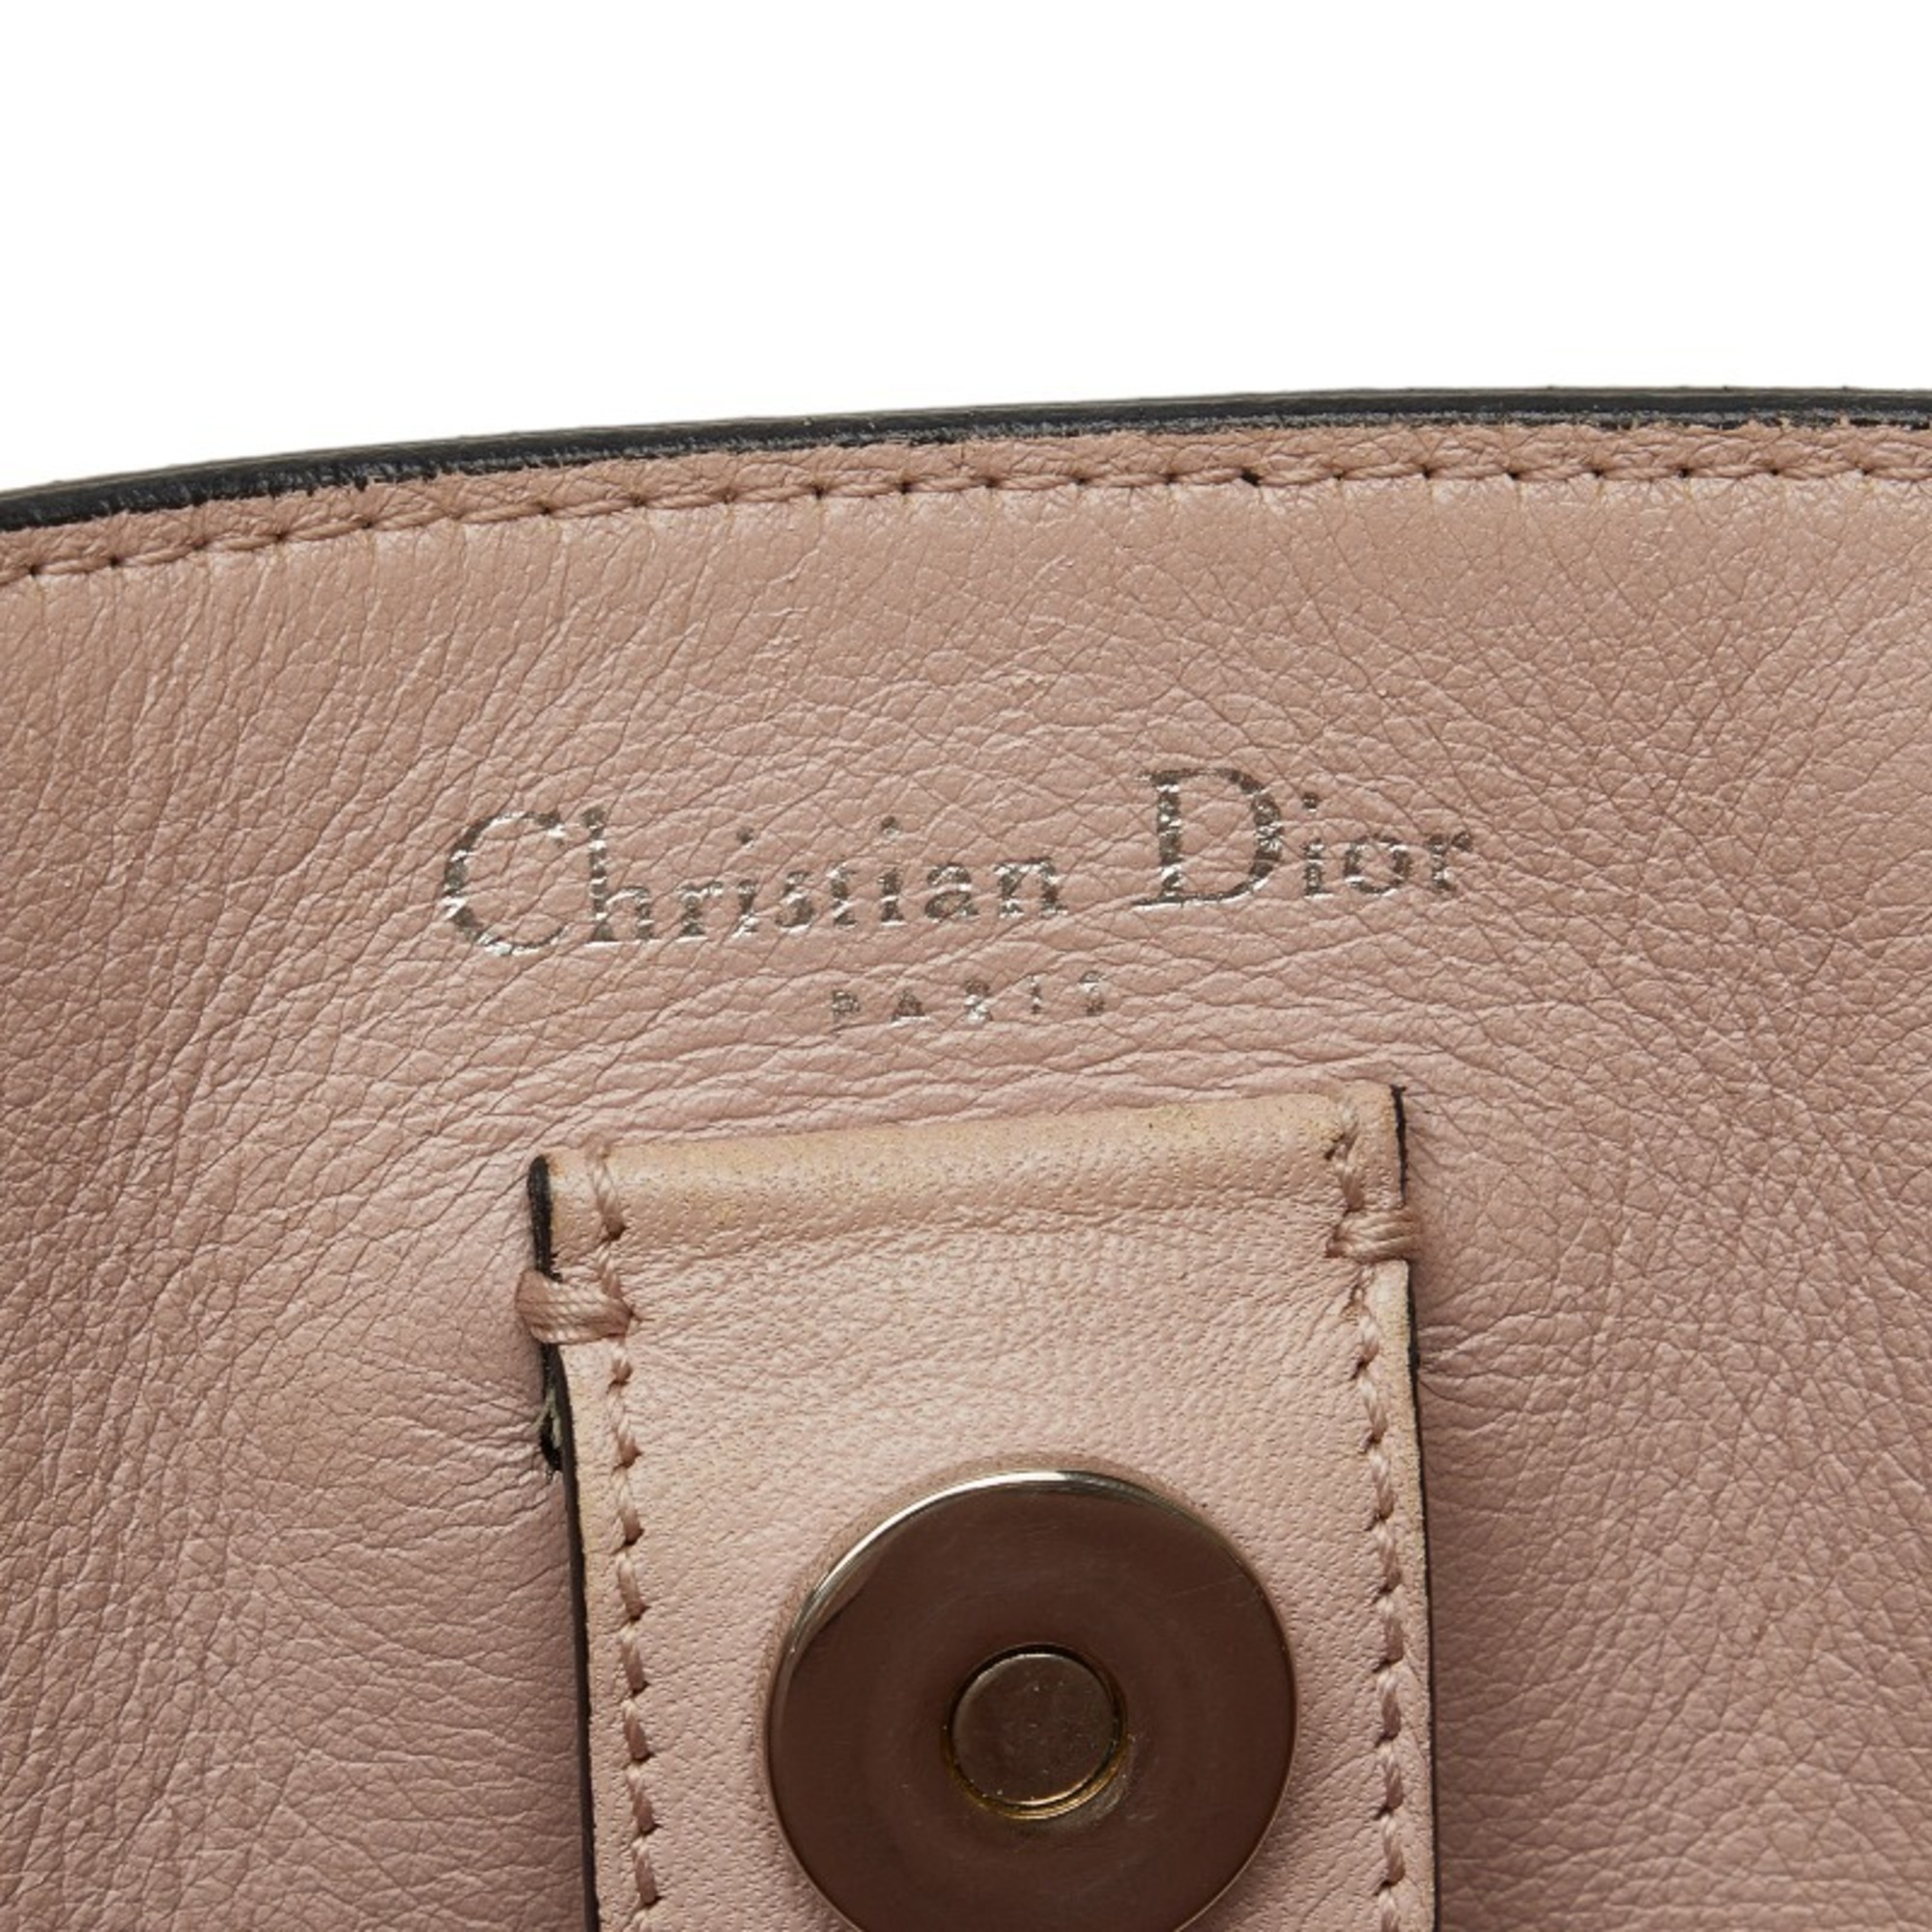 Christian Dior Dior Diorissimo Handbag Shoulder Bag Black Leather Ladies